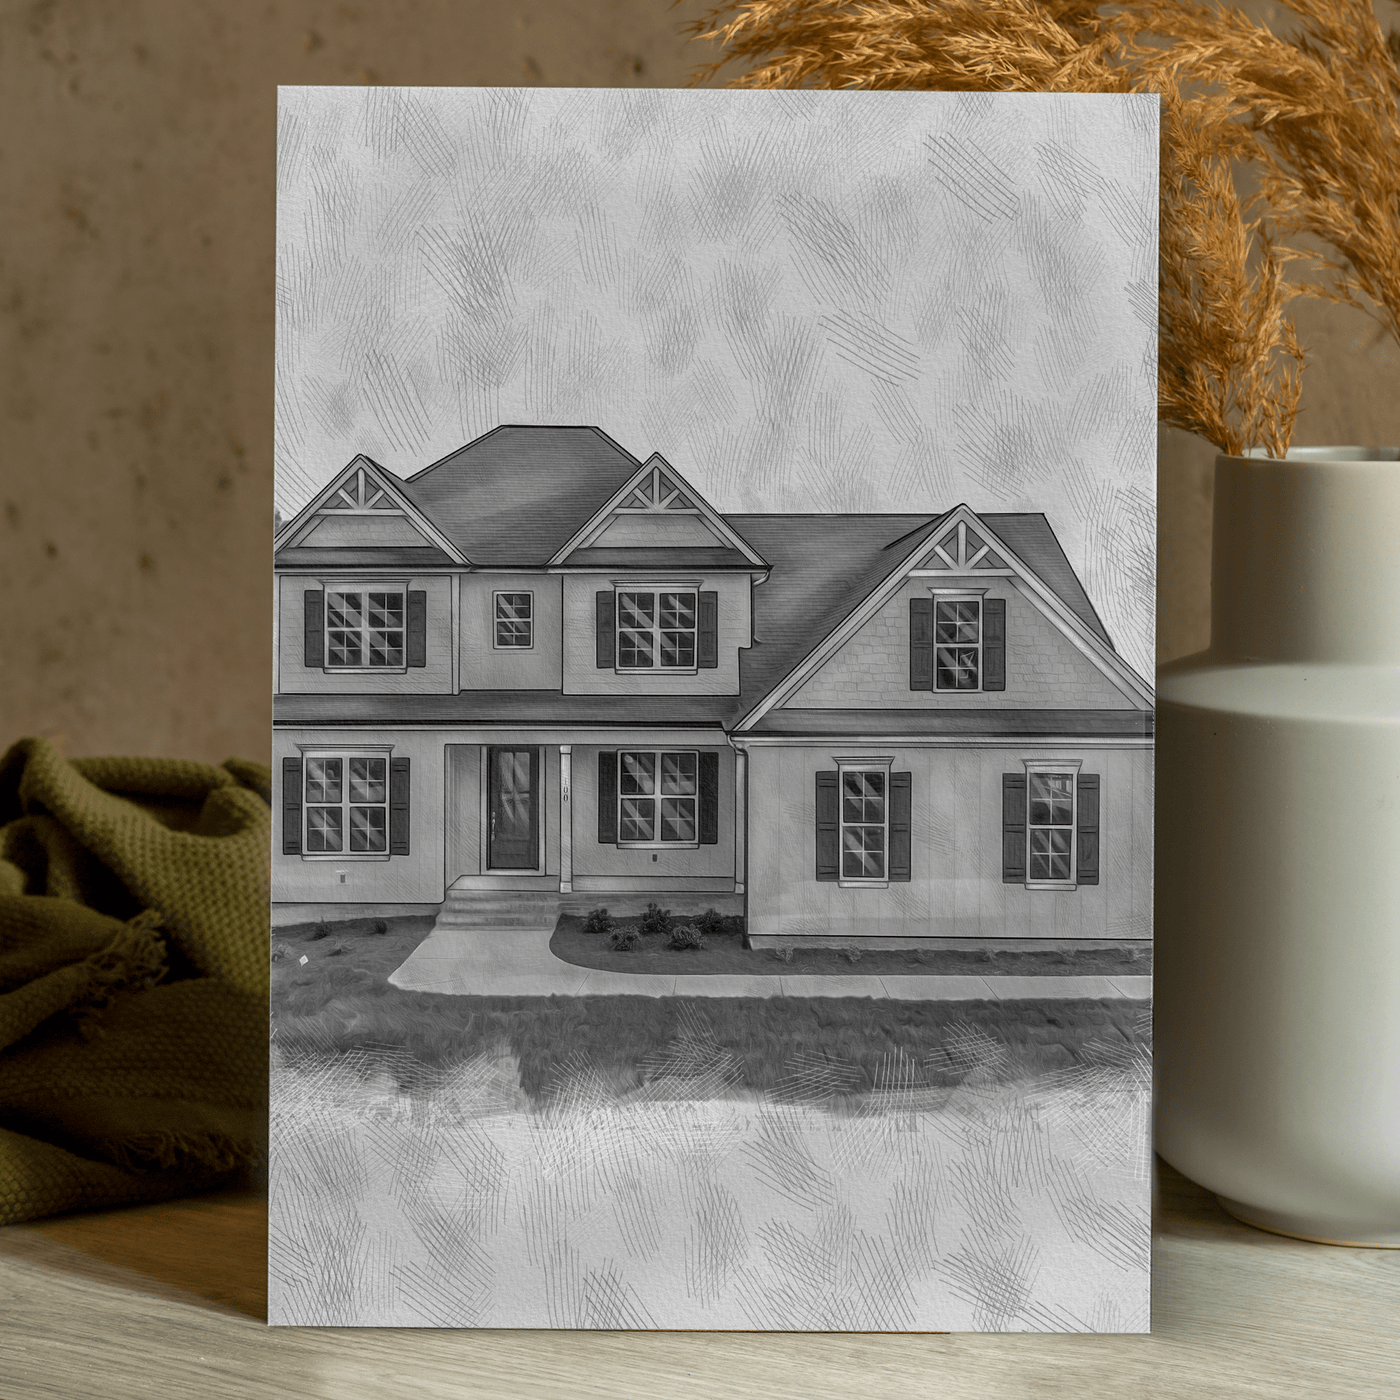 Custom Pencil Drawing of House